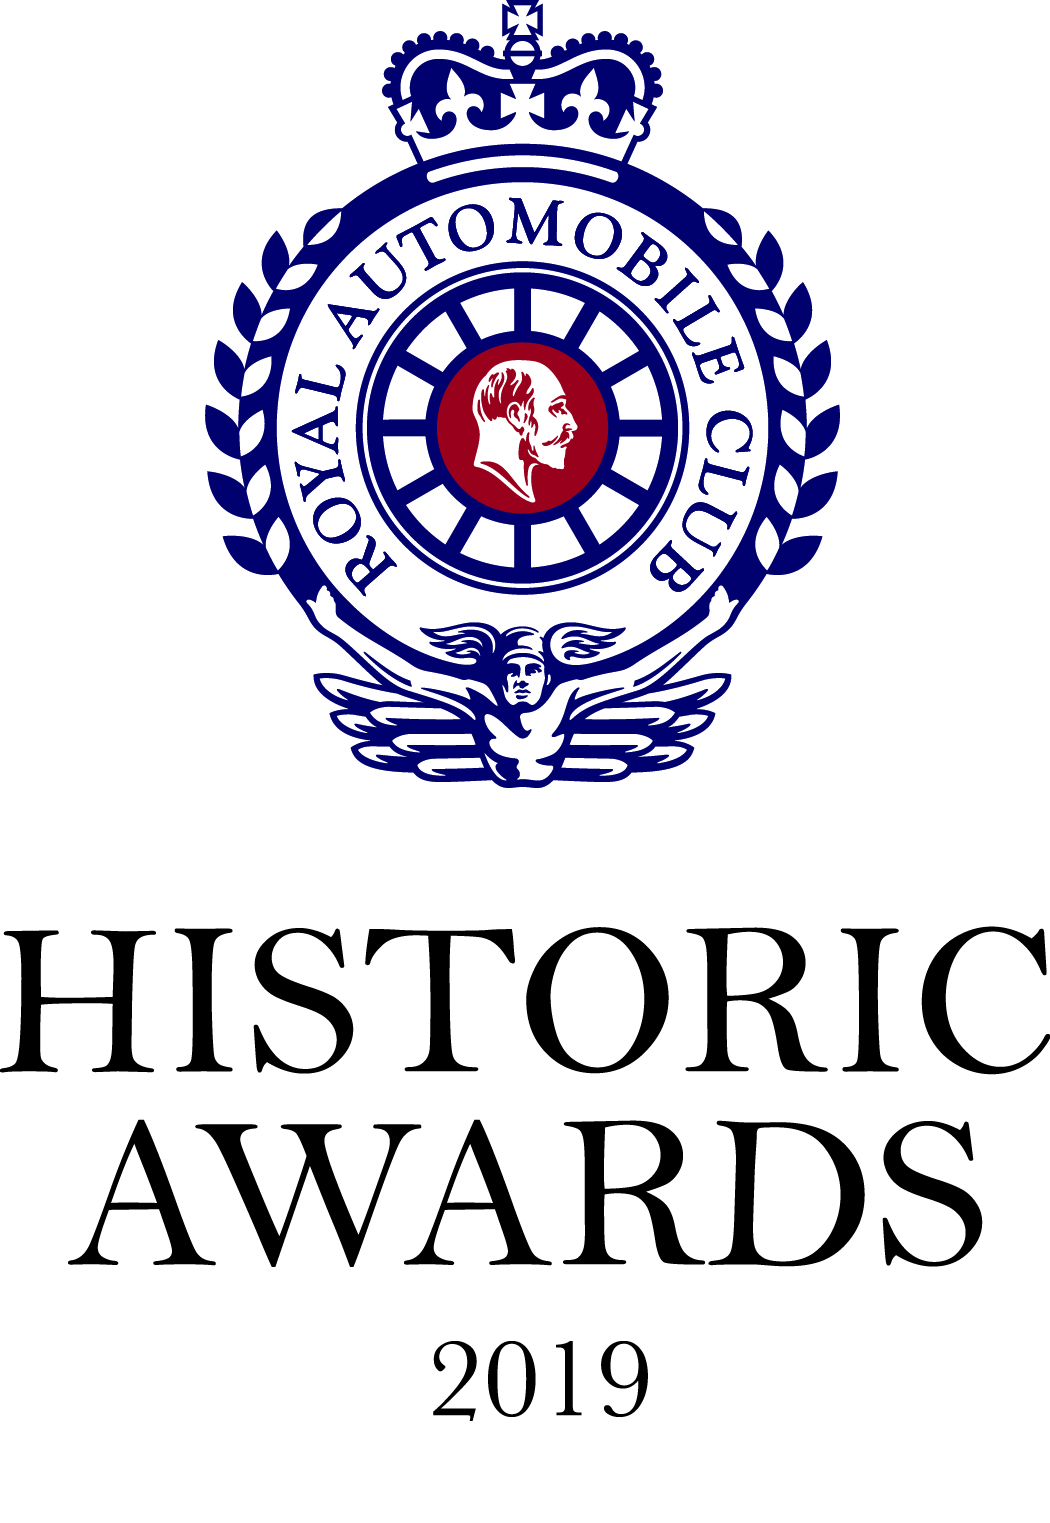 Royal Automobile Club Awards